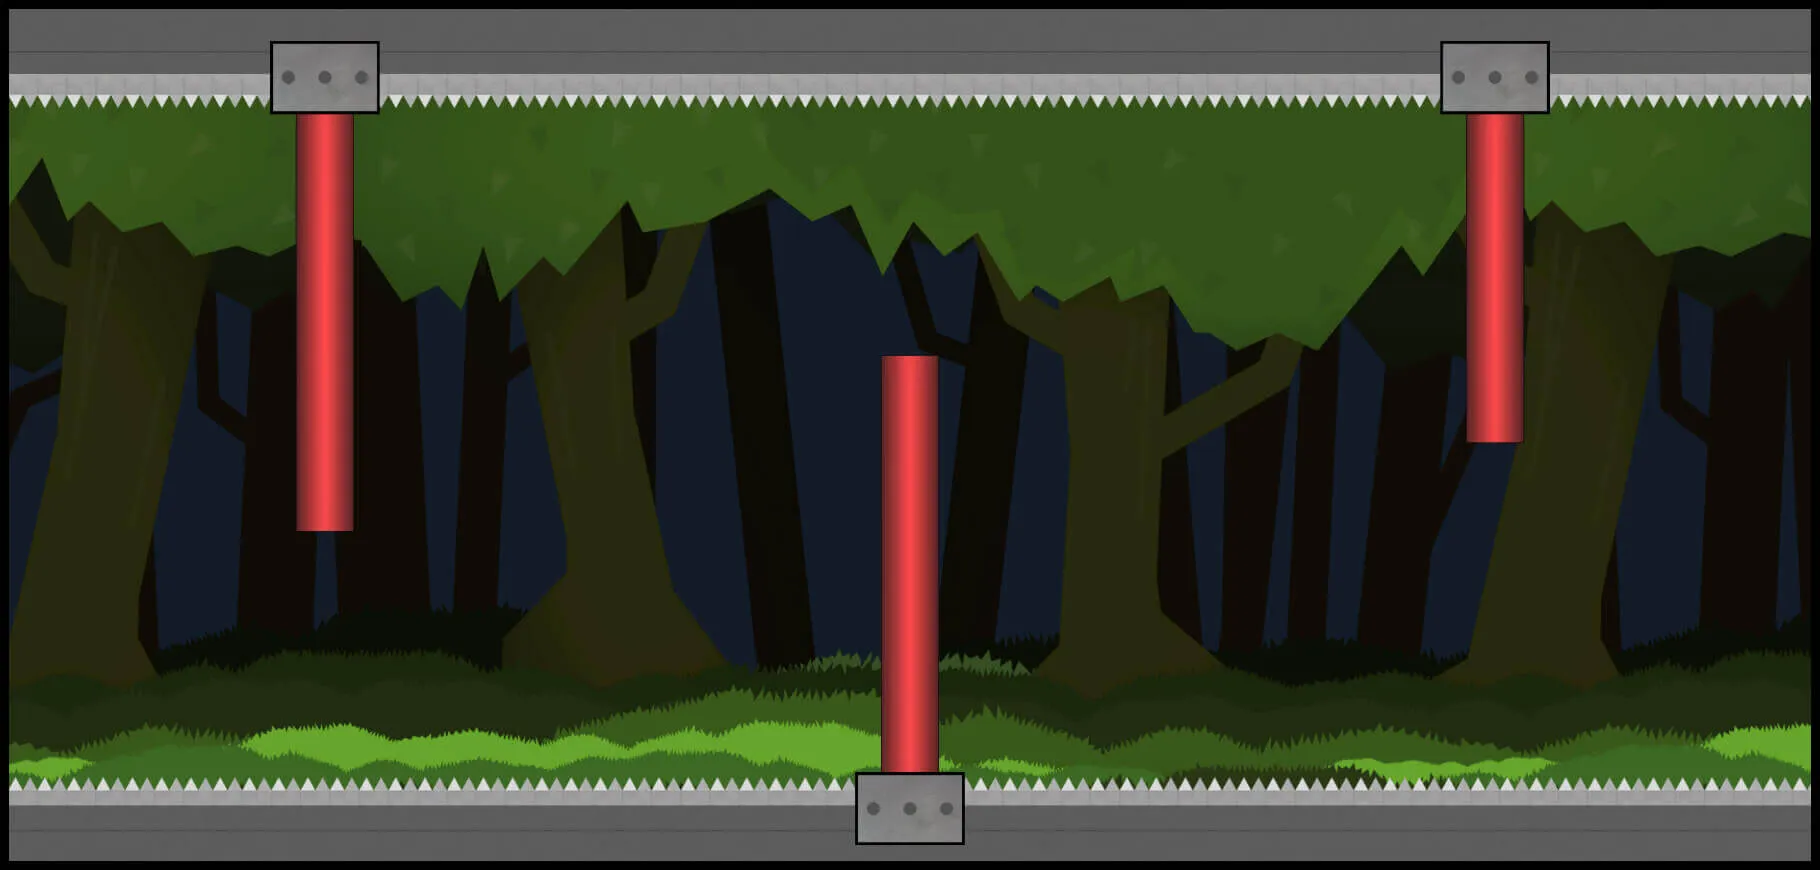 illusionist level screenshot from the steam game reflex runner.